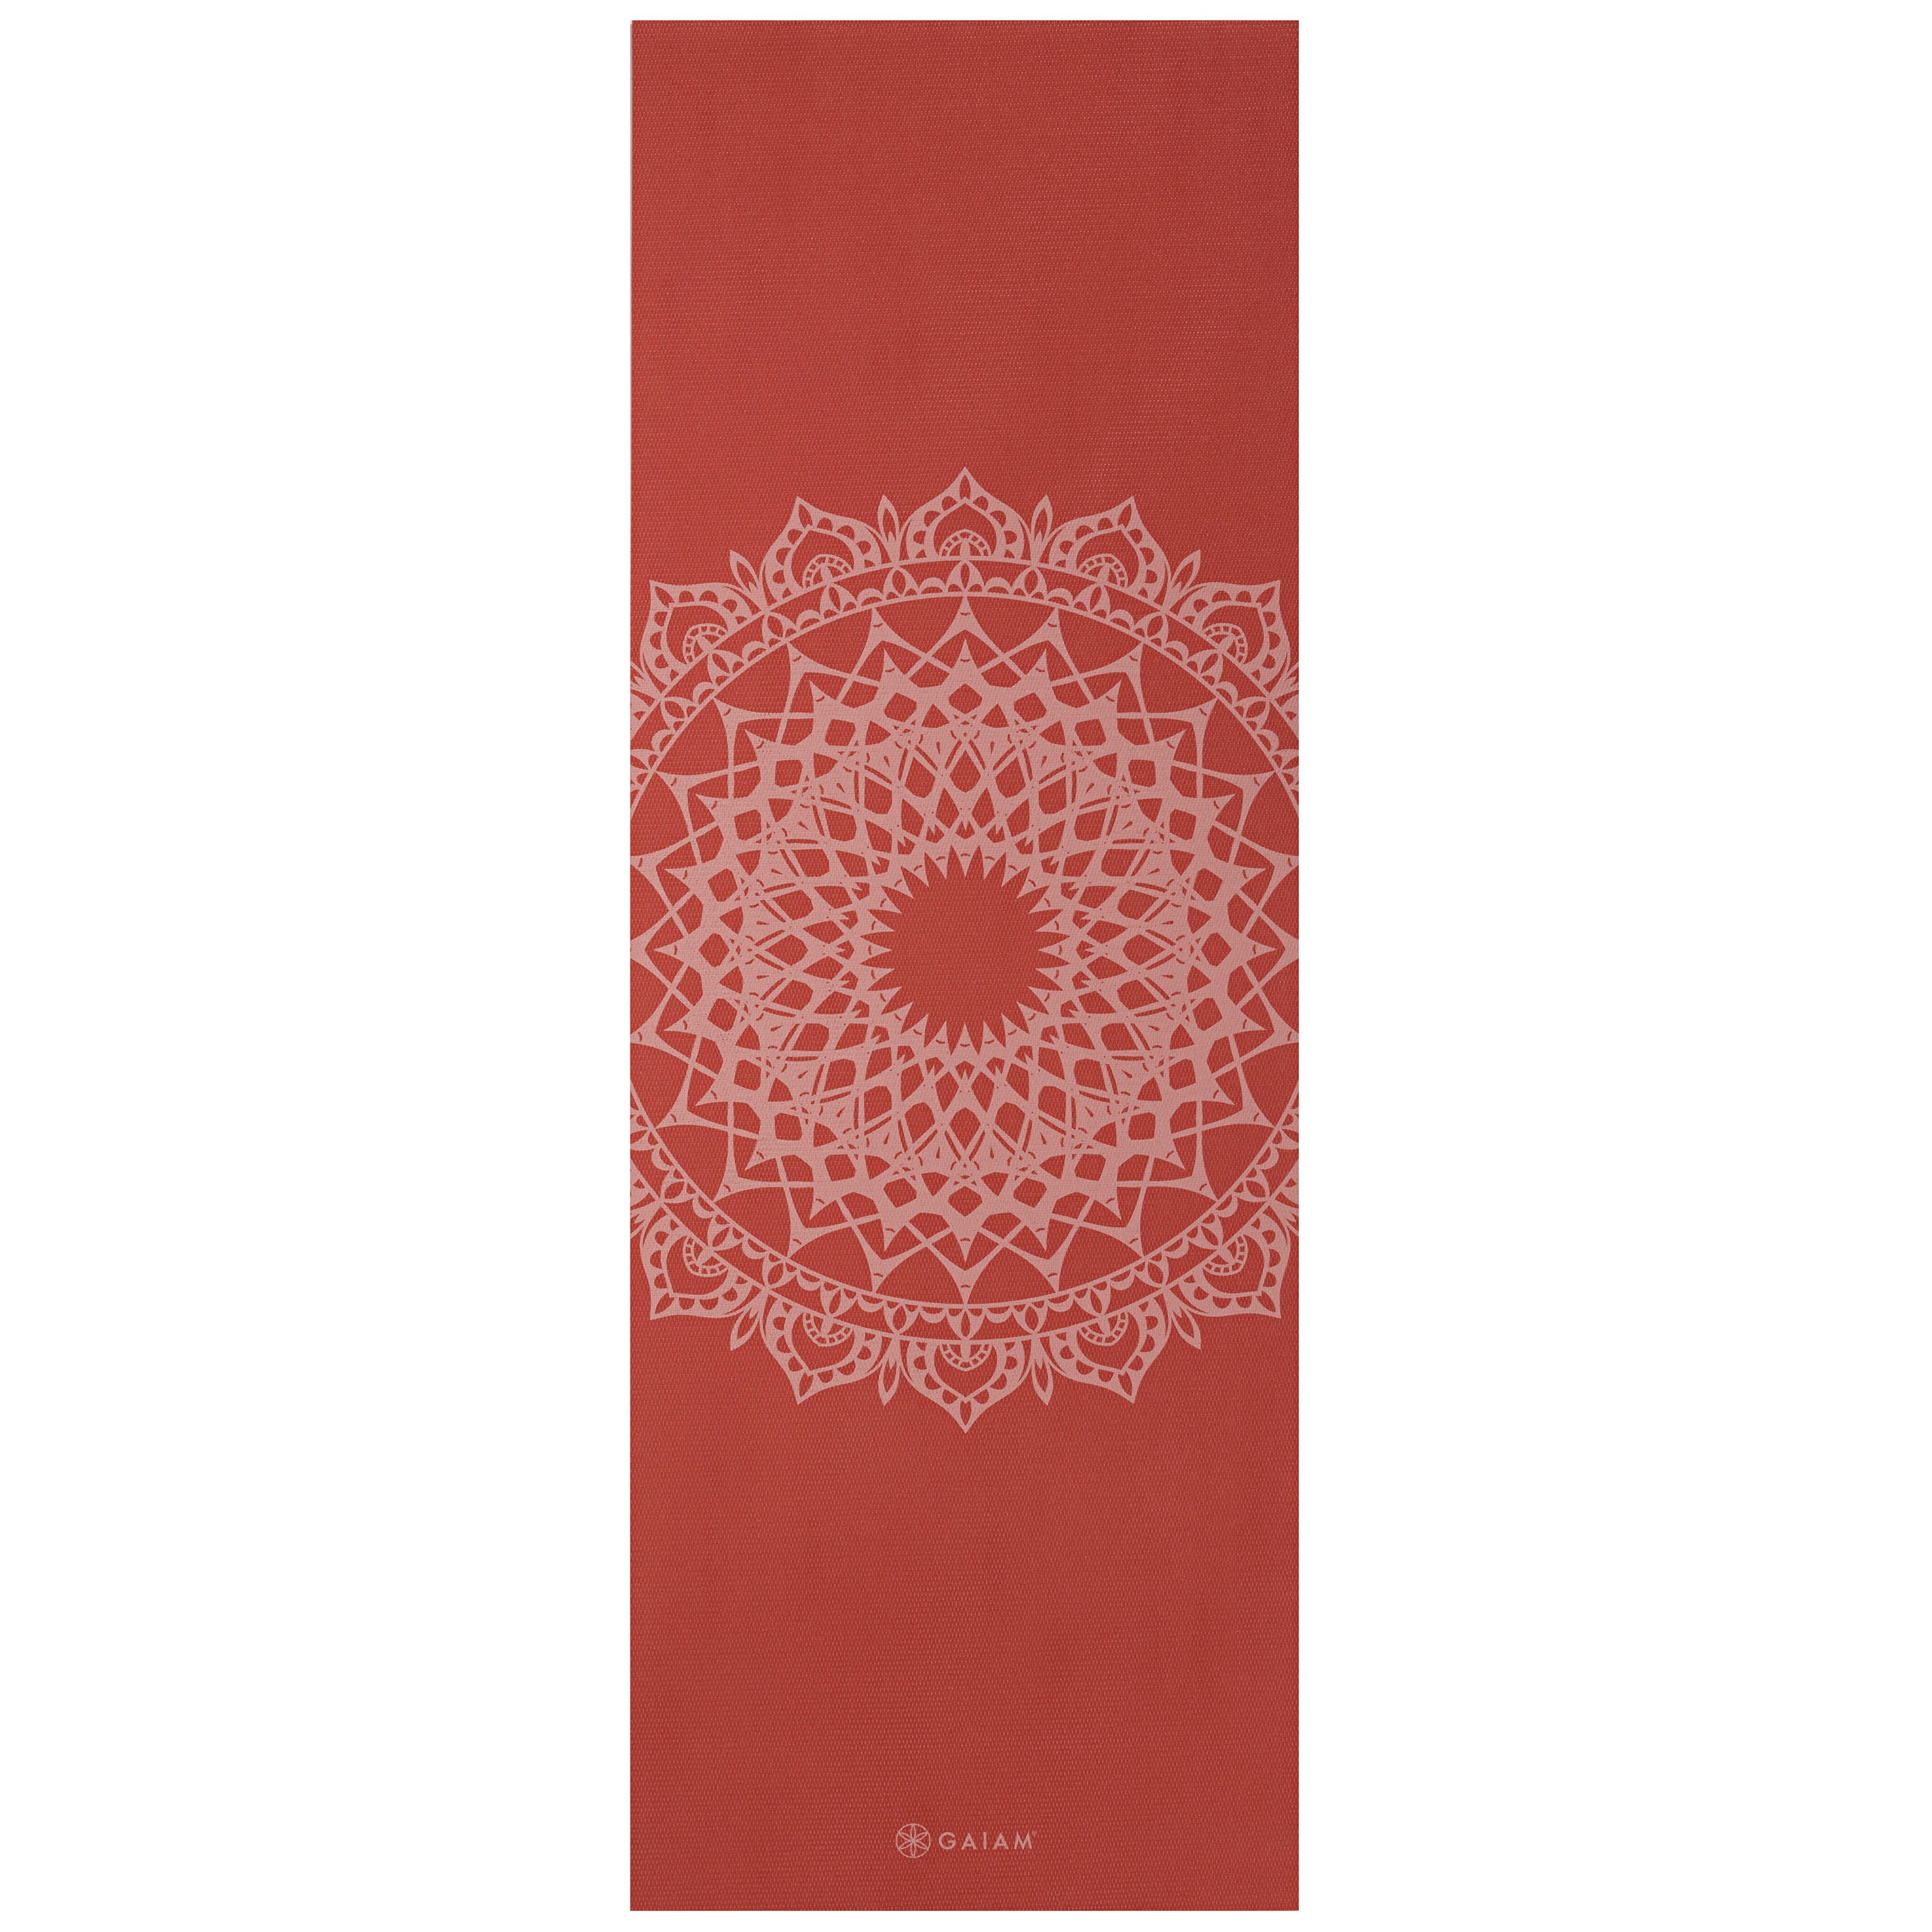 Gaiam Yoga Mat Moroccan Garden Printed Lightweight Non-Slip 68”x24